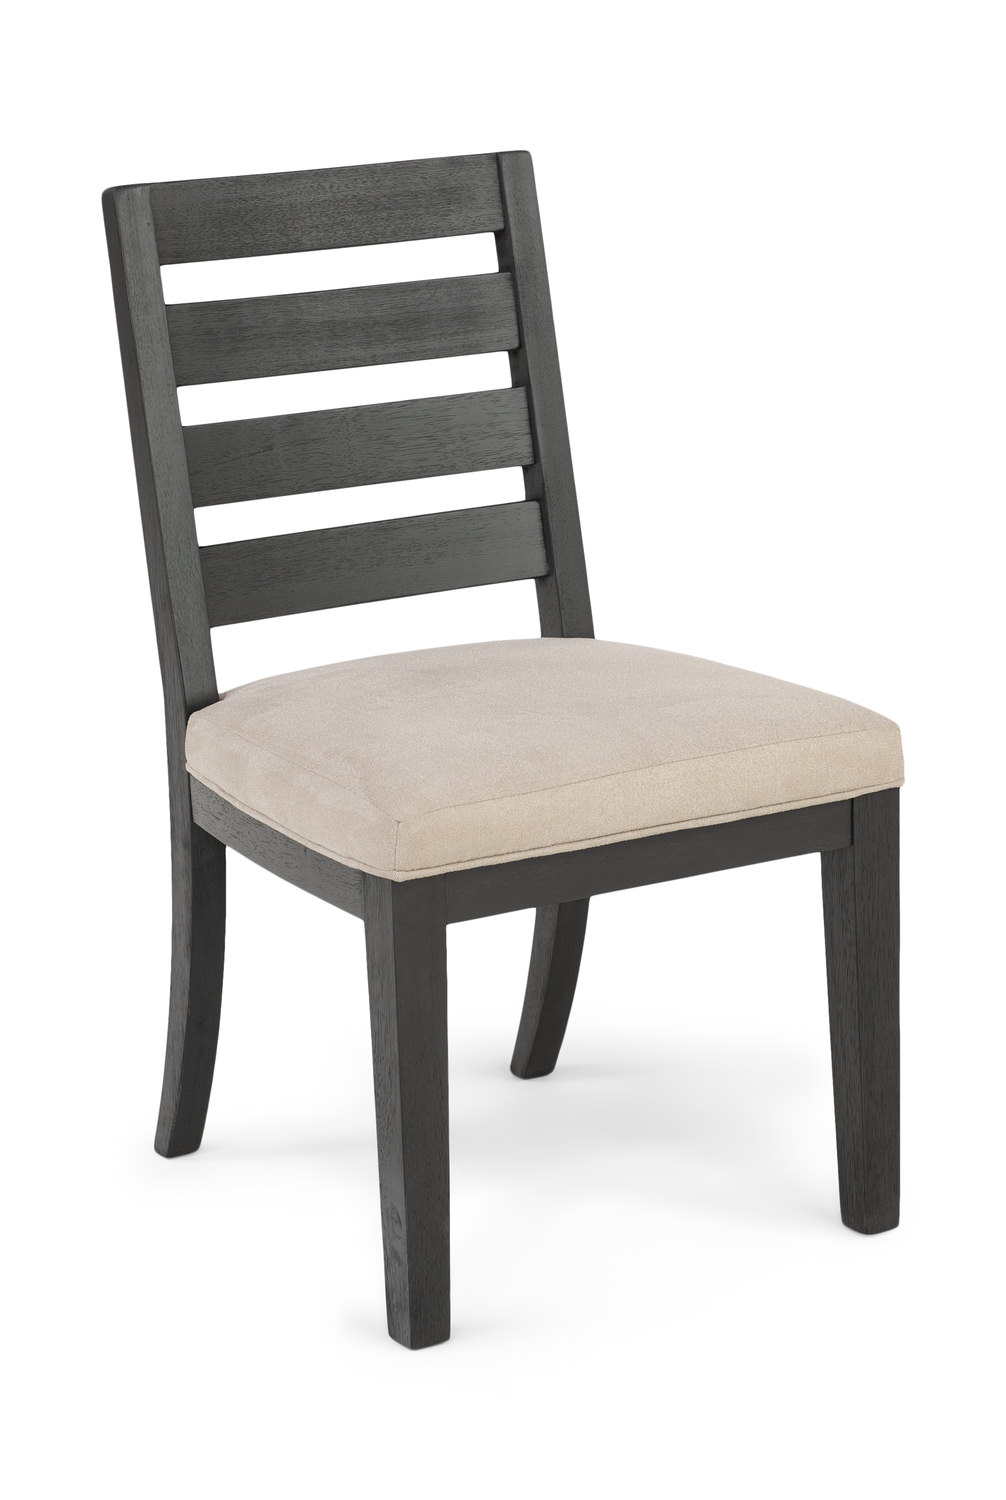 Westwood Ladderback Side Chair